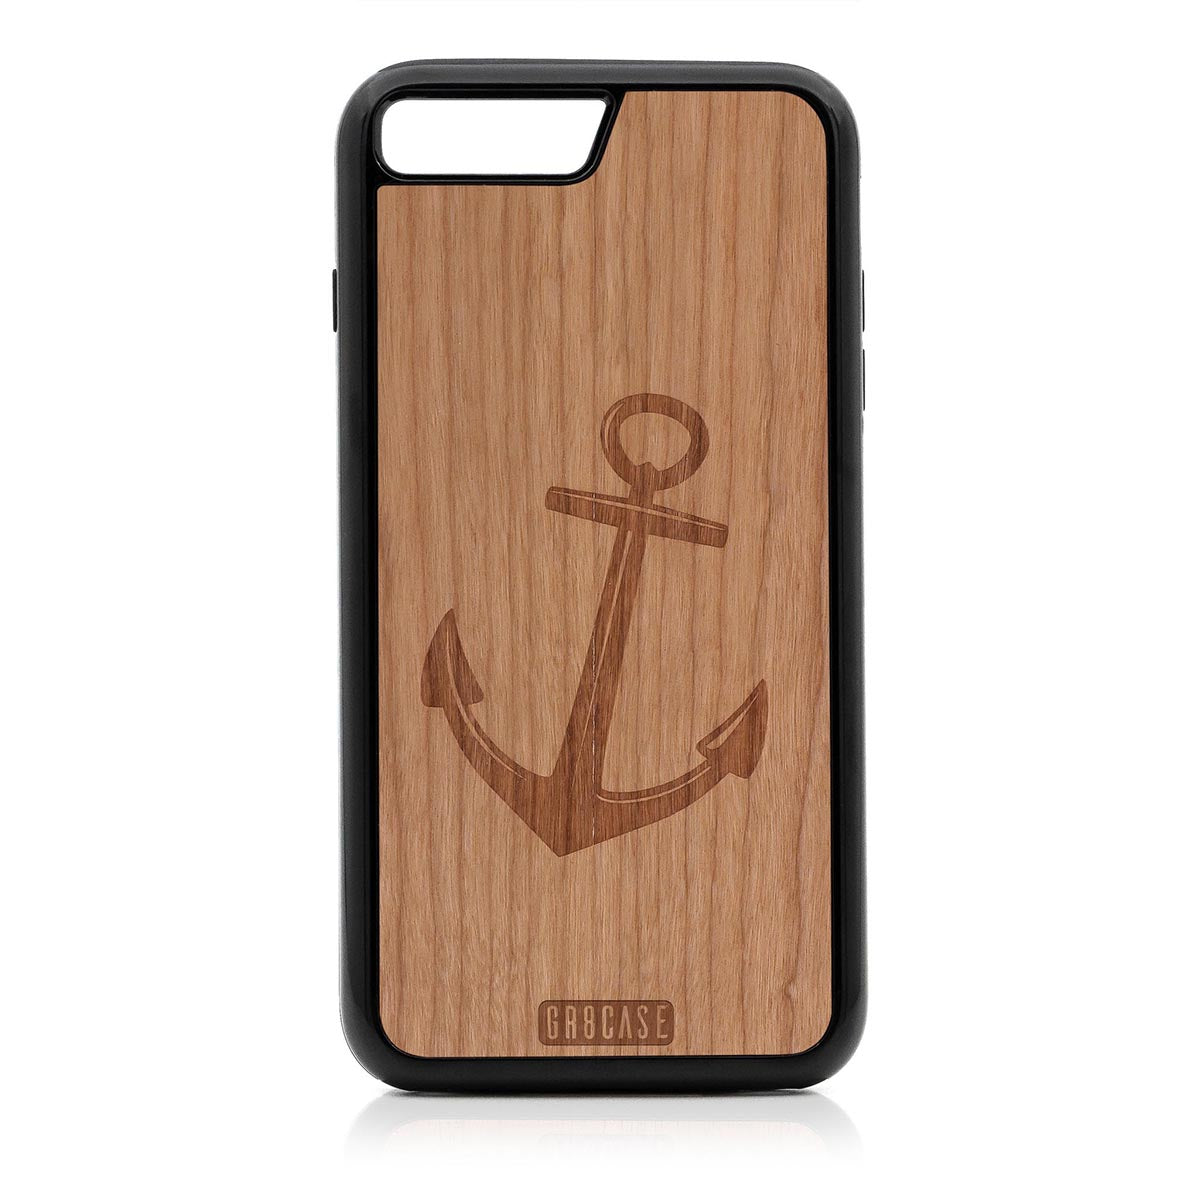 Anchor Design Wood Case For iPhone 7 Plus / 8 Plus by GR8CASE